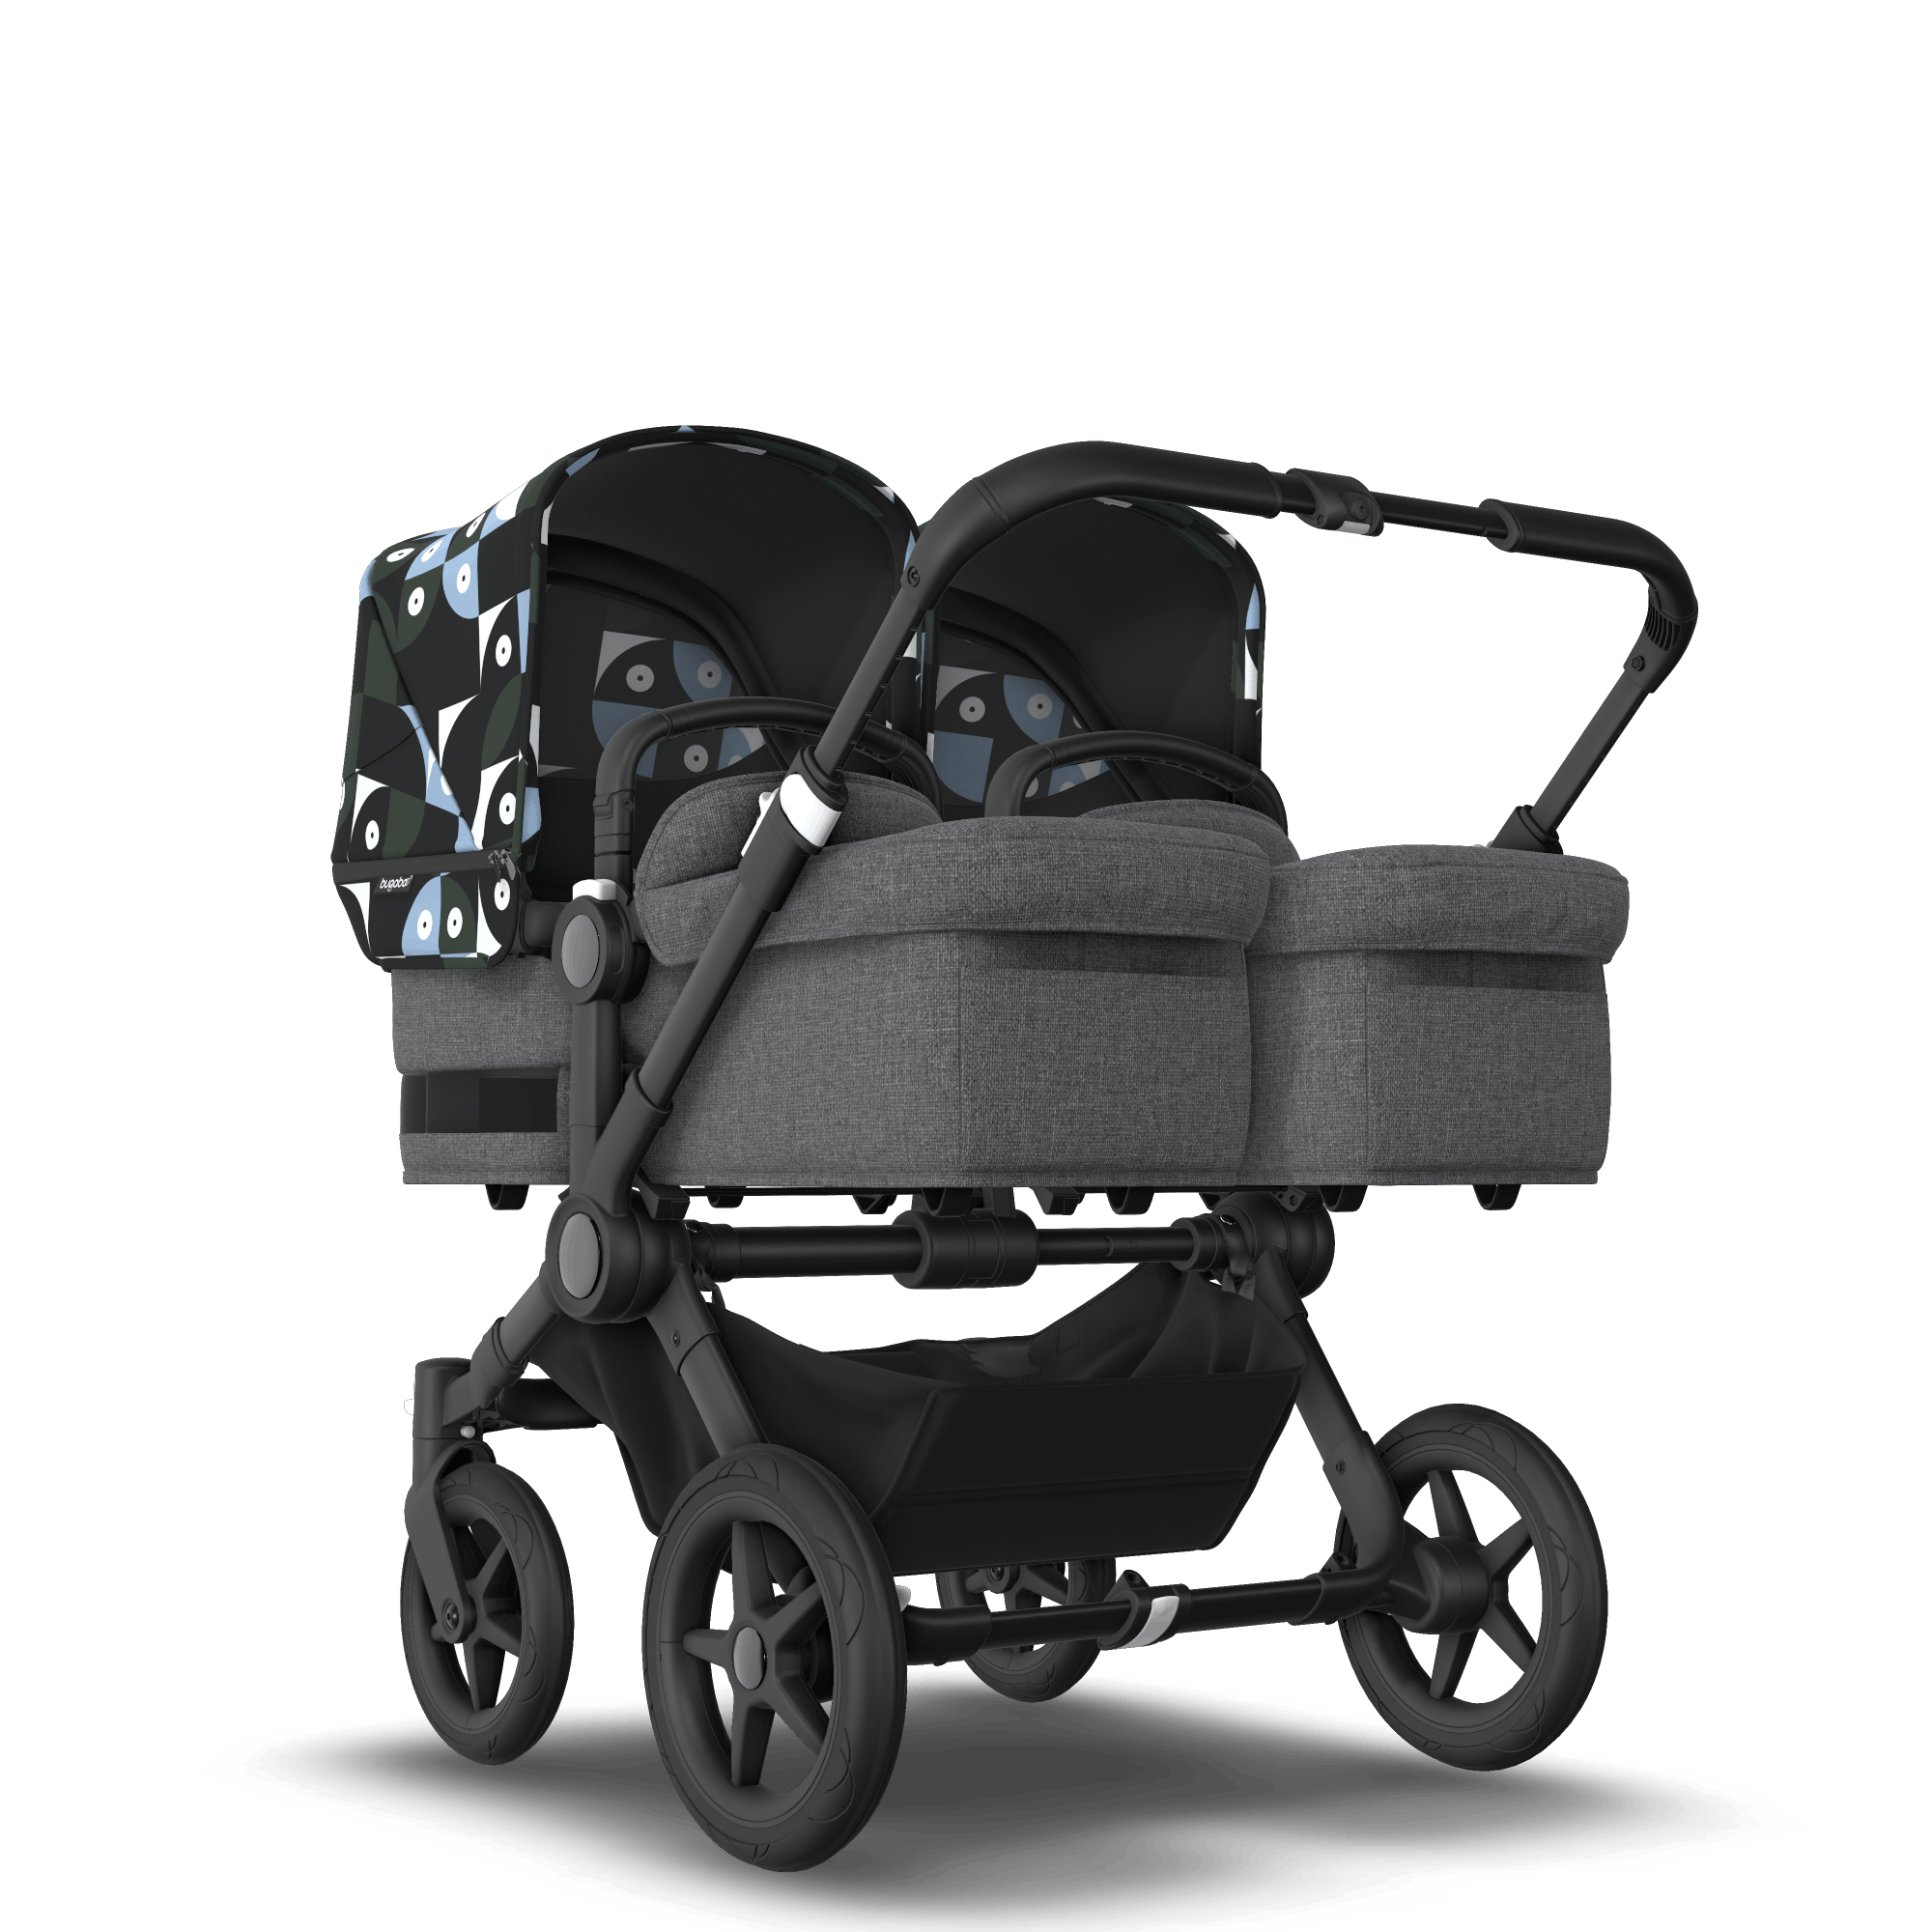 Bugaboo Donkey 5 Twin bassinet and seat stroller black base grey mélange fabrics animal explorer green/light blue sun canopy